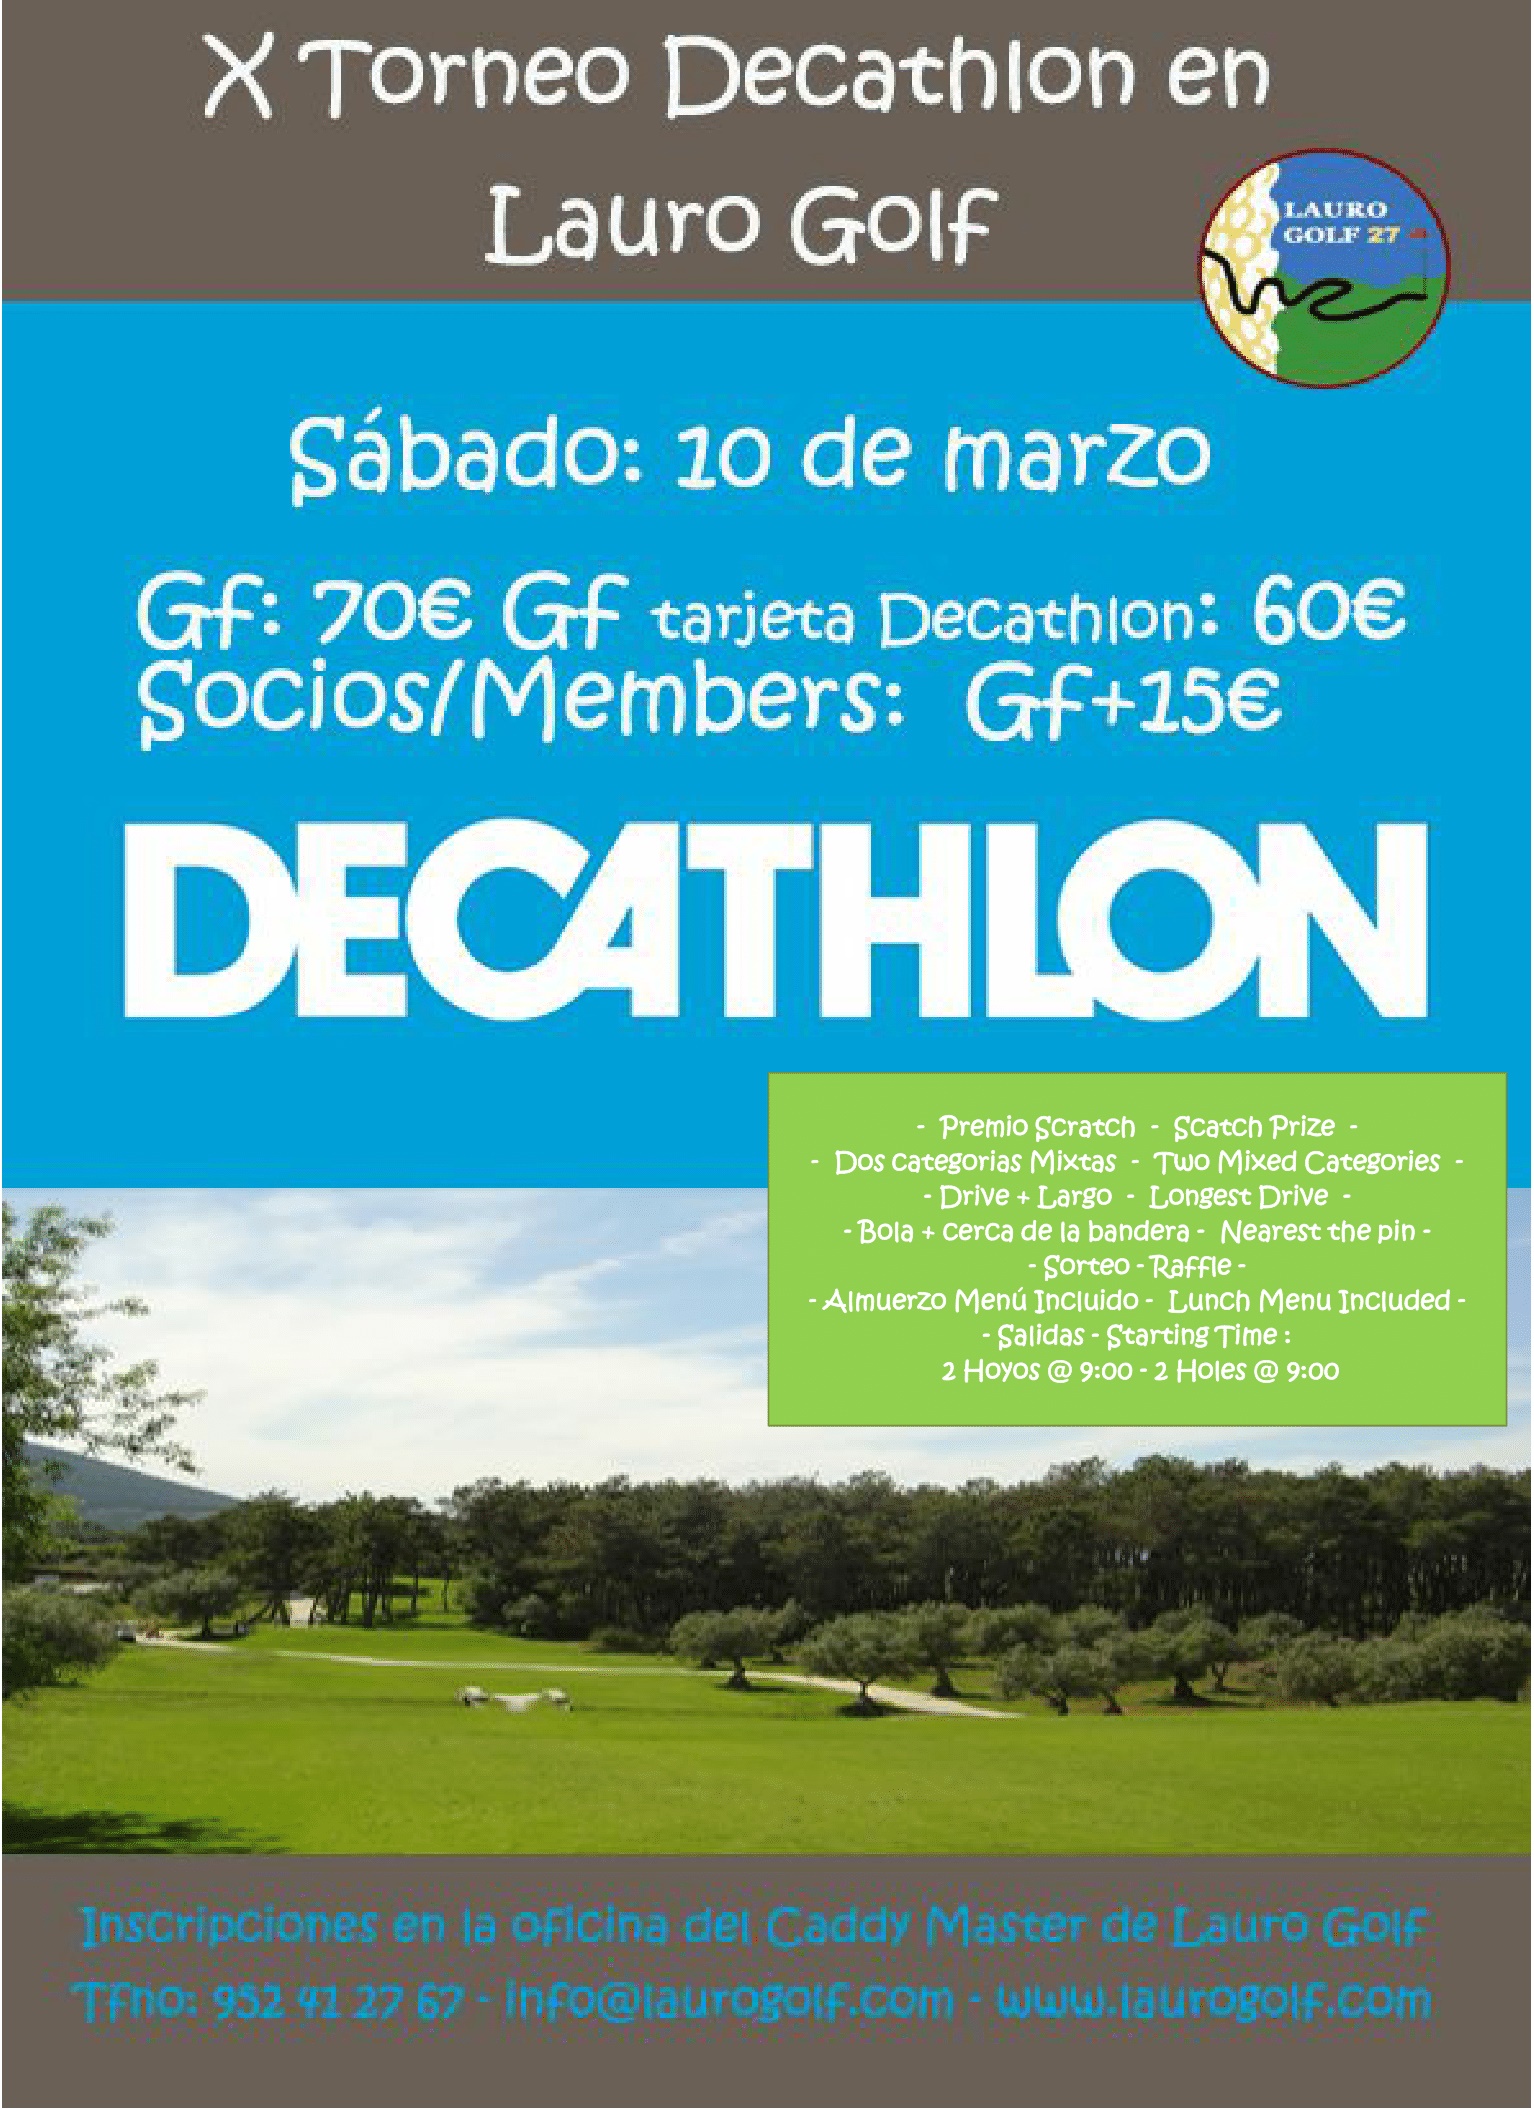 Torneo Decathlon en Lauro Golf